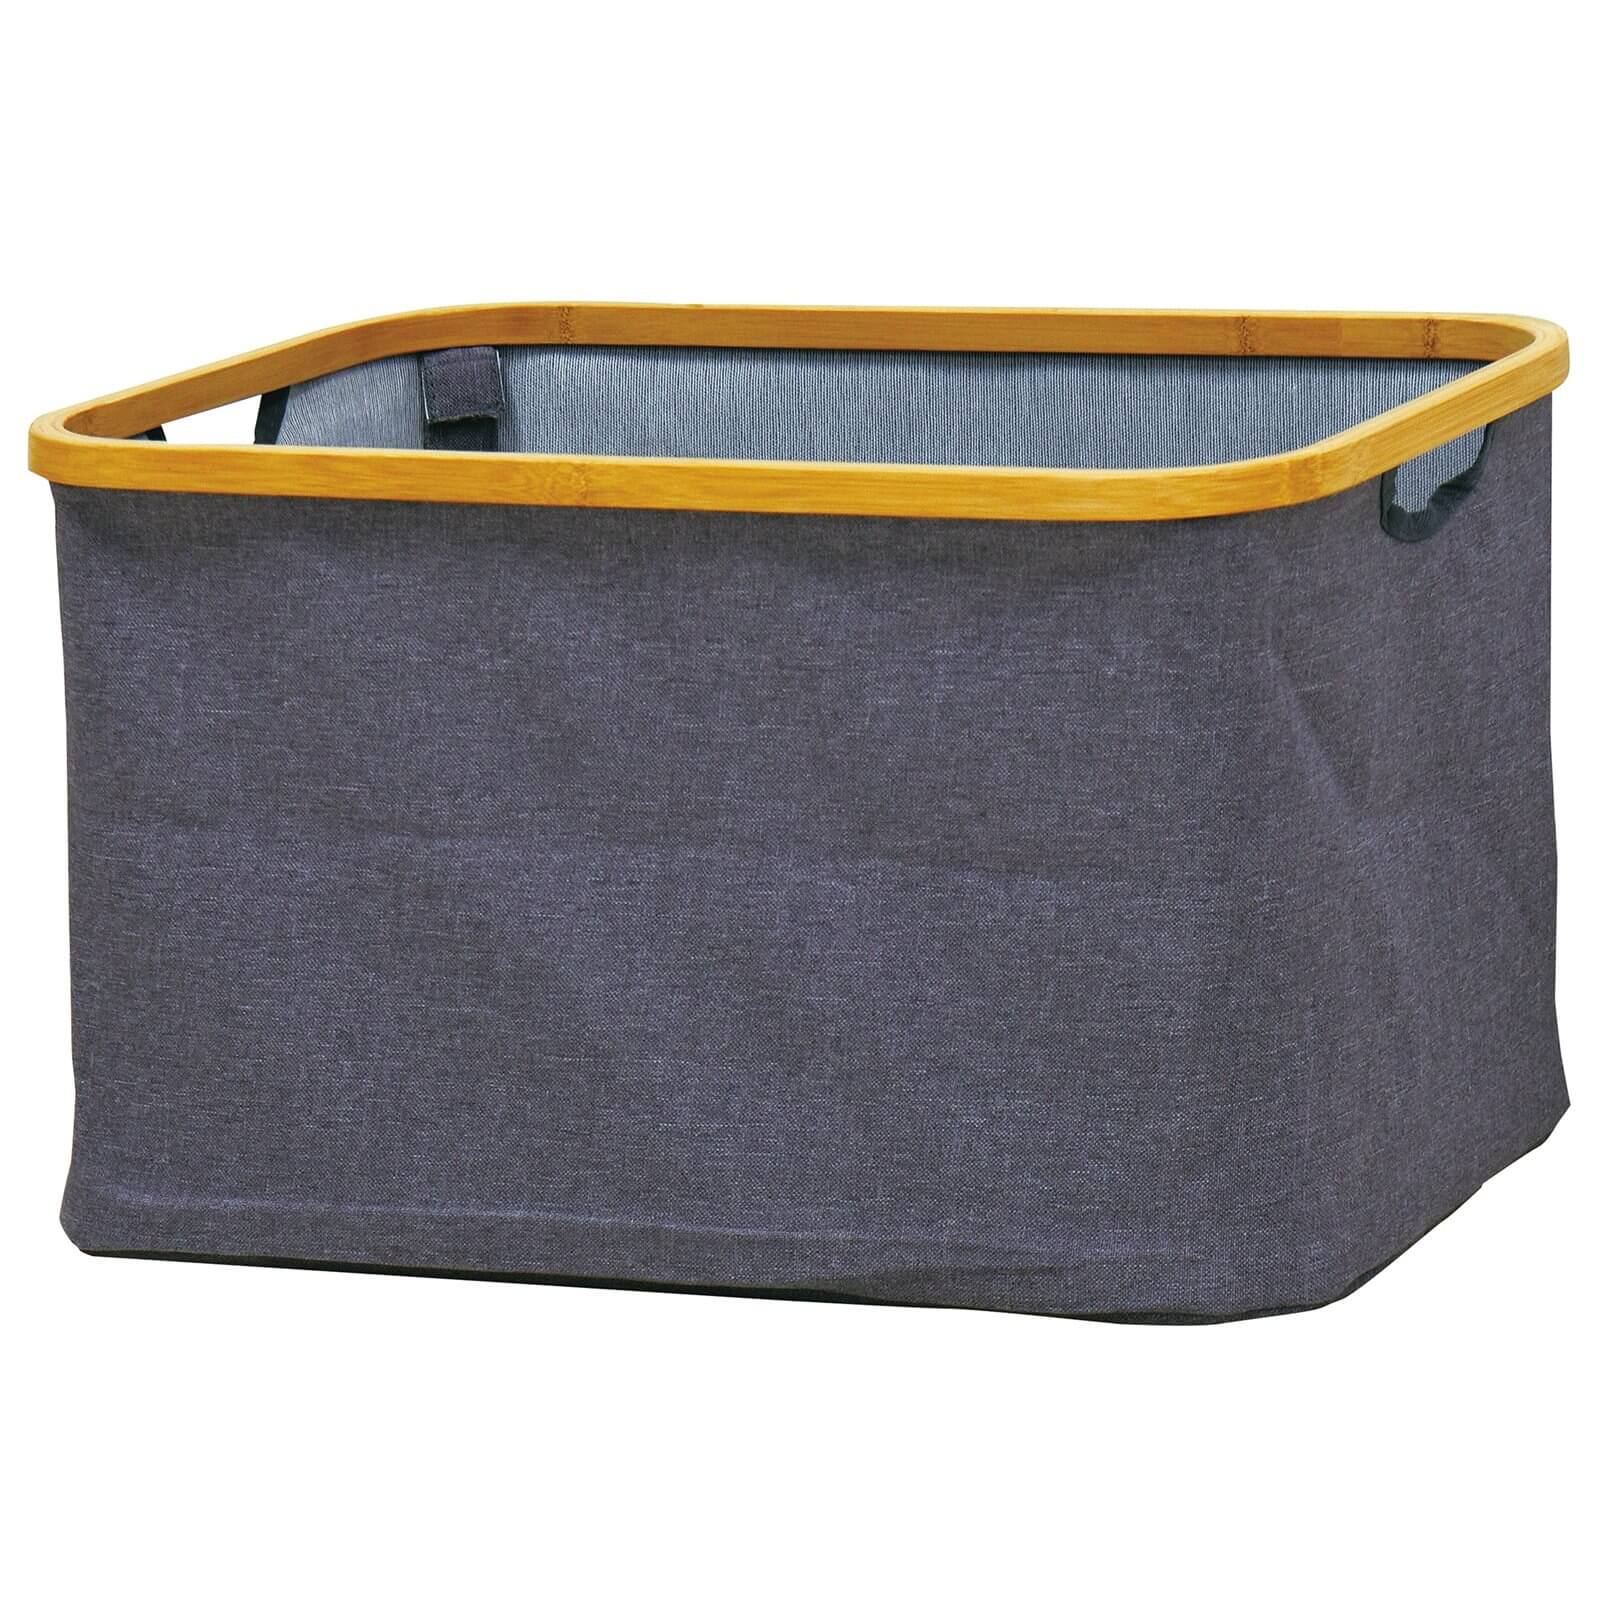 Fabric Storage With Bamboo Edge - Grey